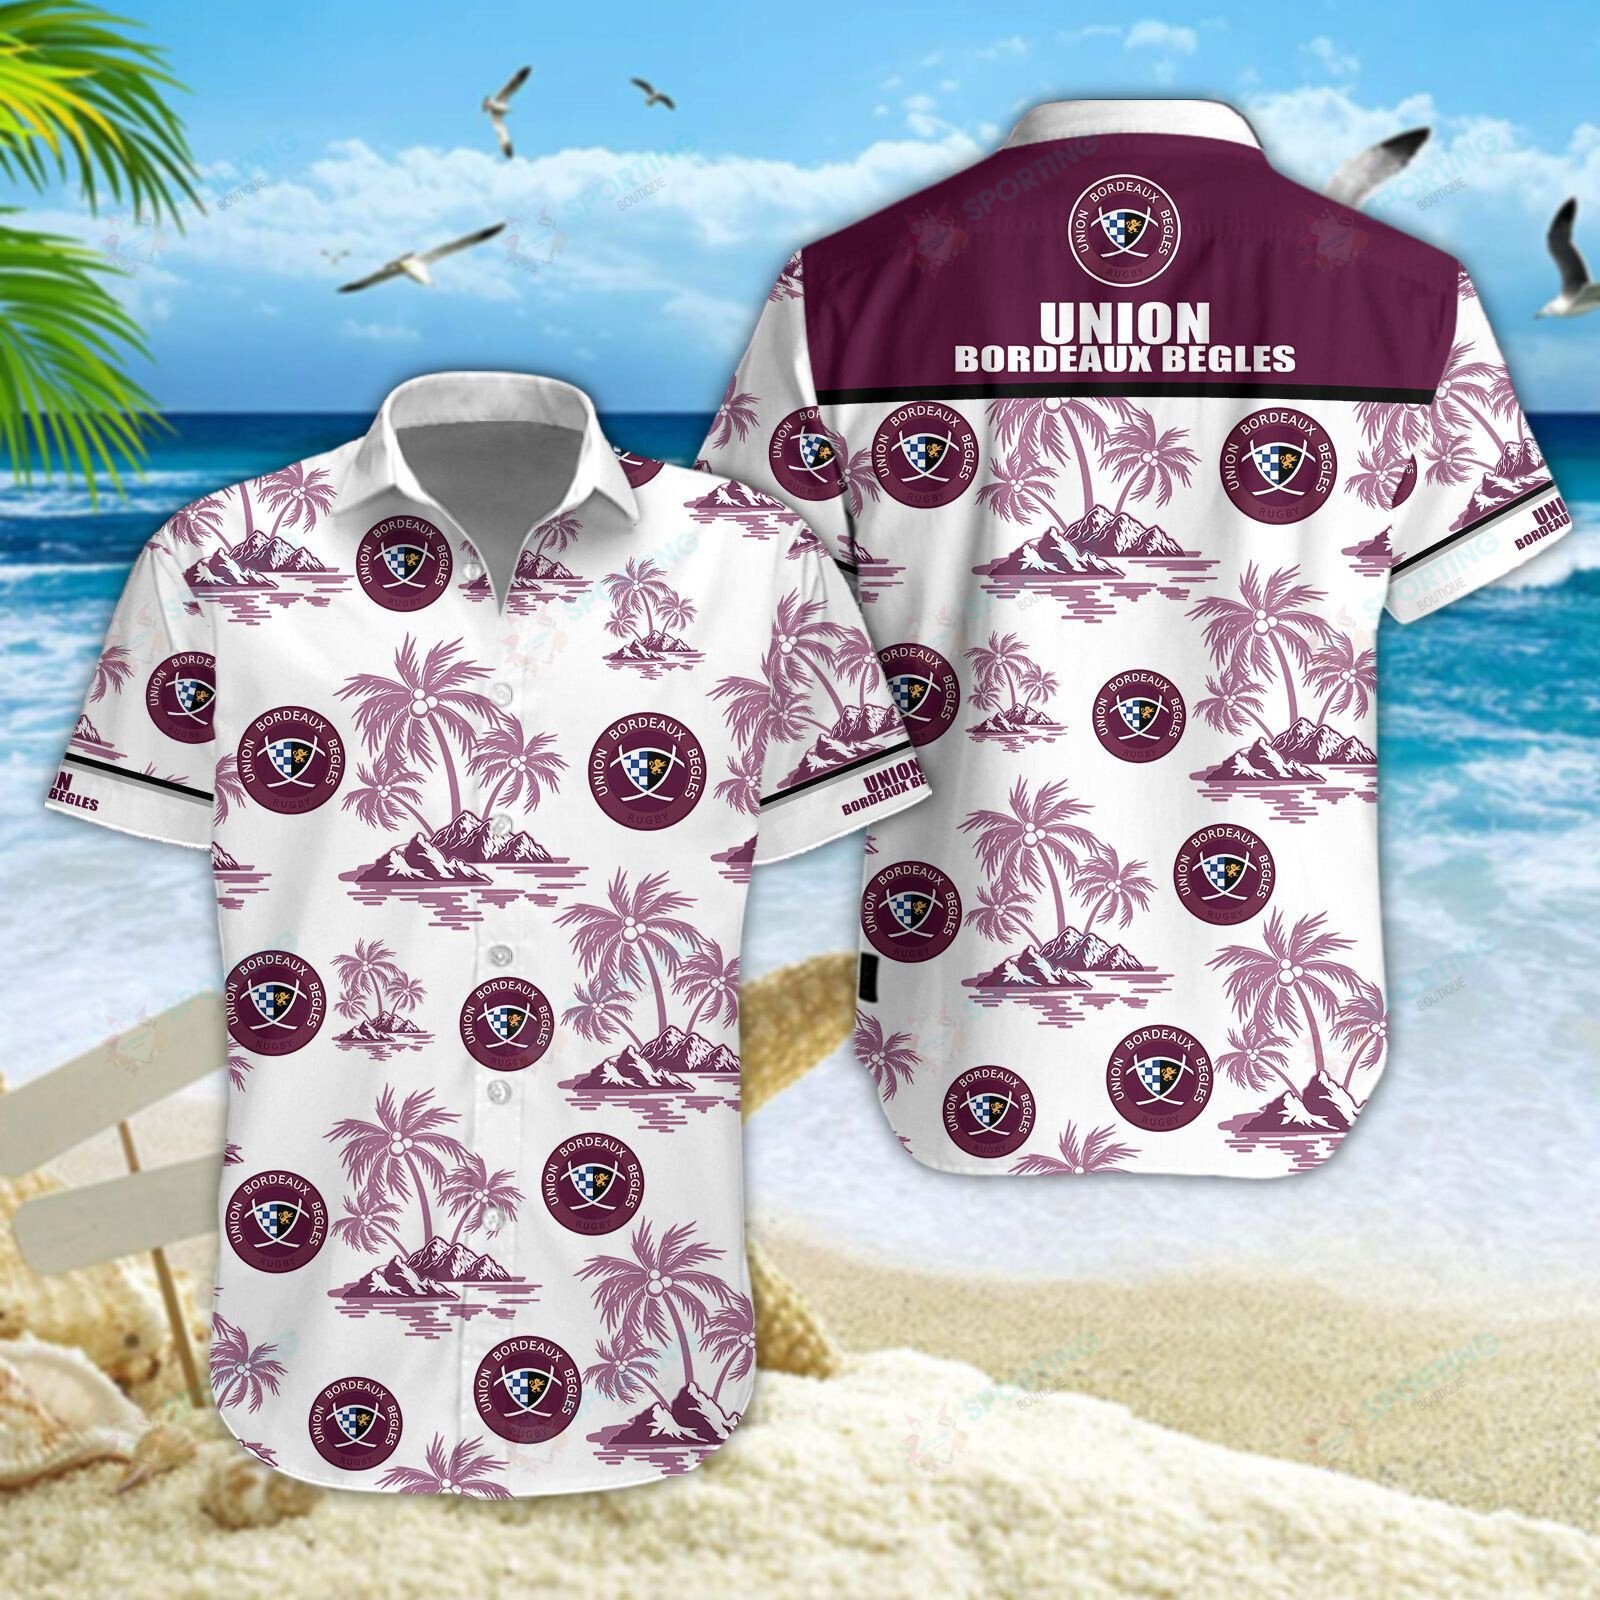 Union Bordeaux Begles 3D Hawaiian Shirt, Shorts 4